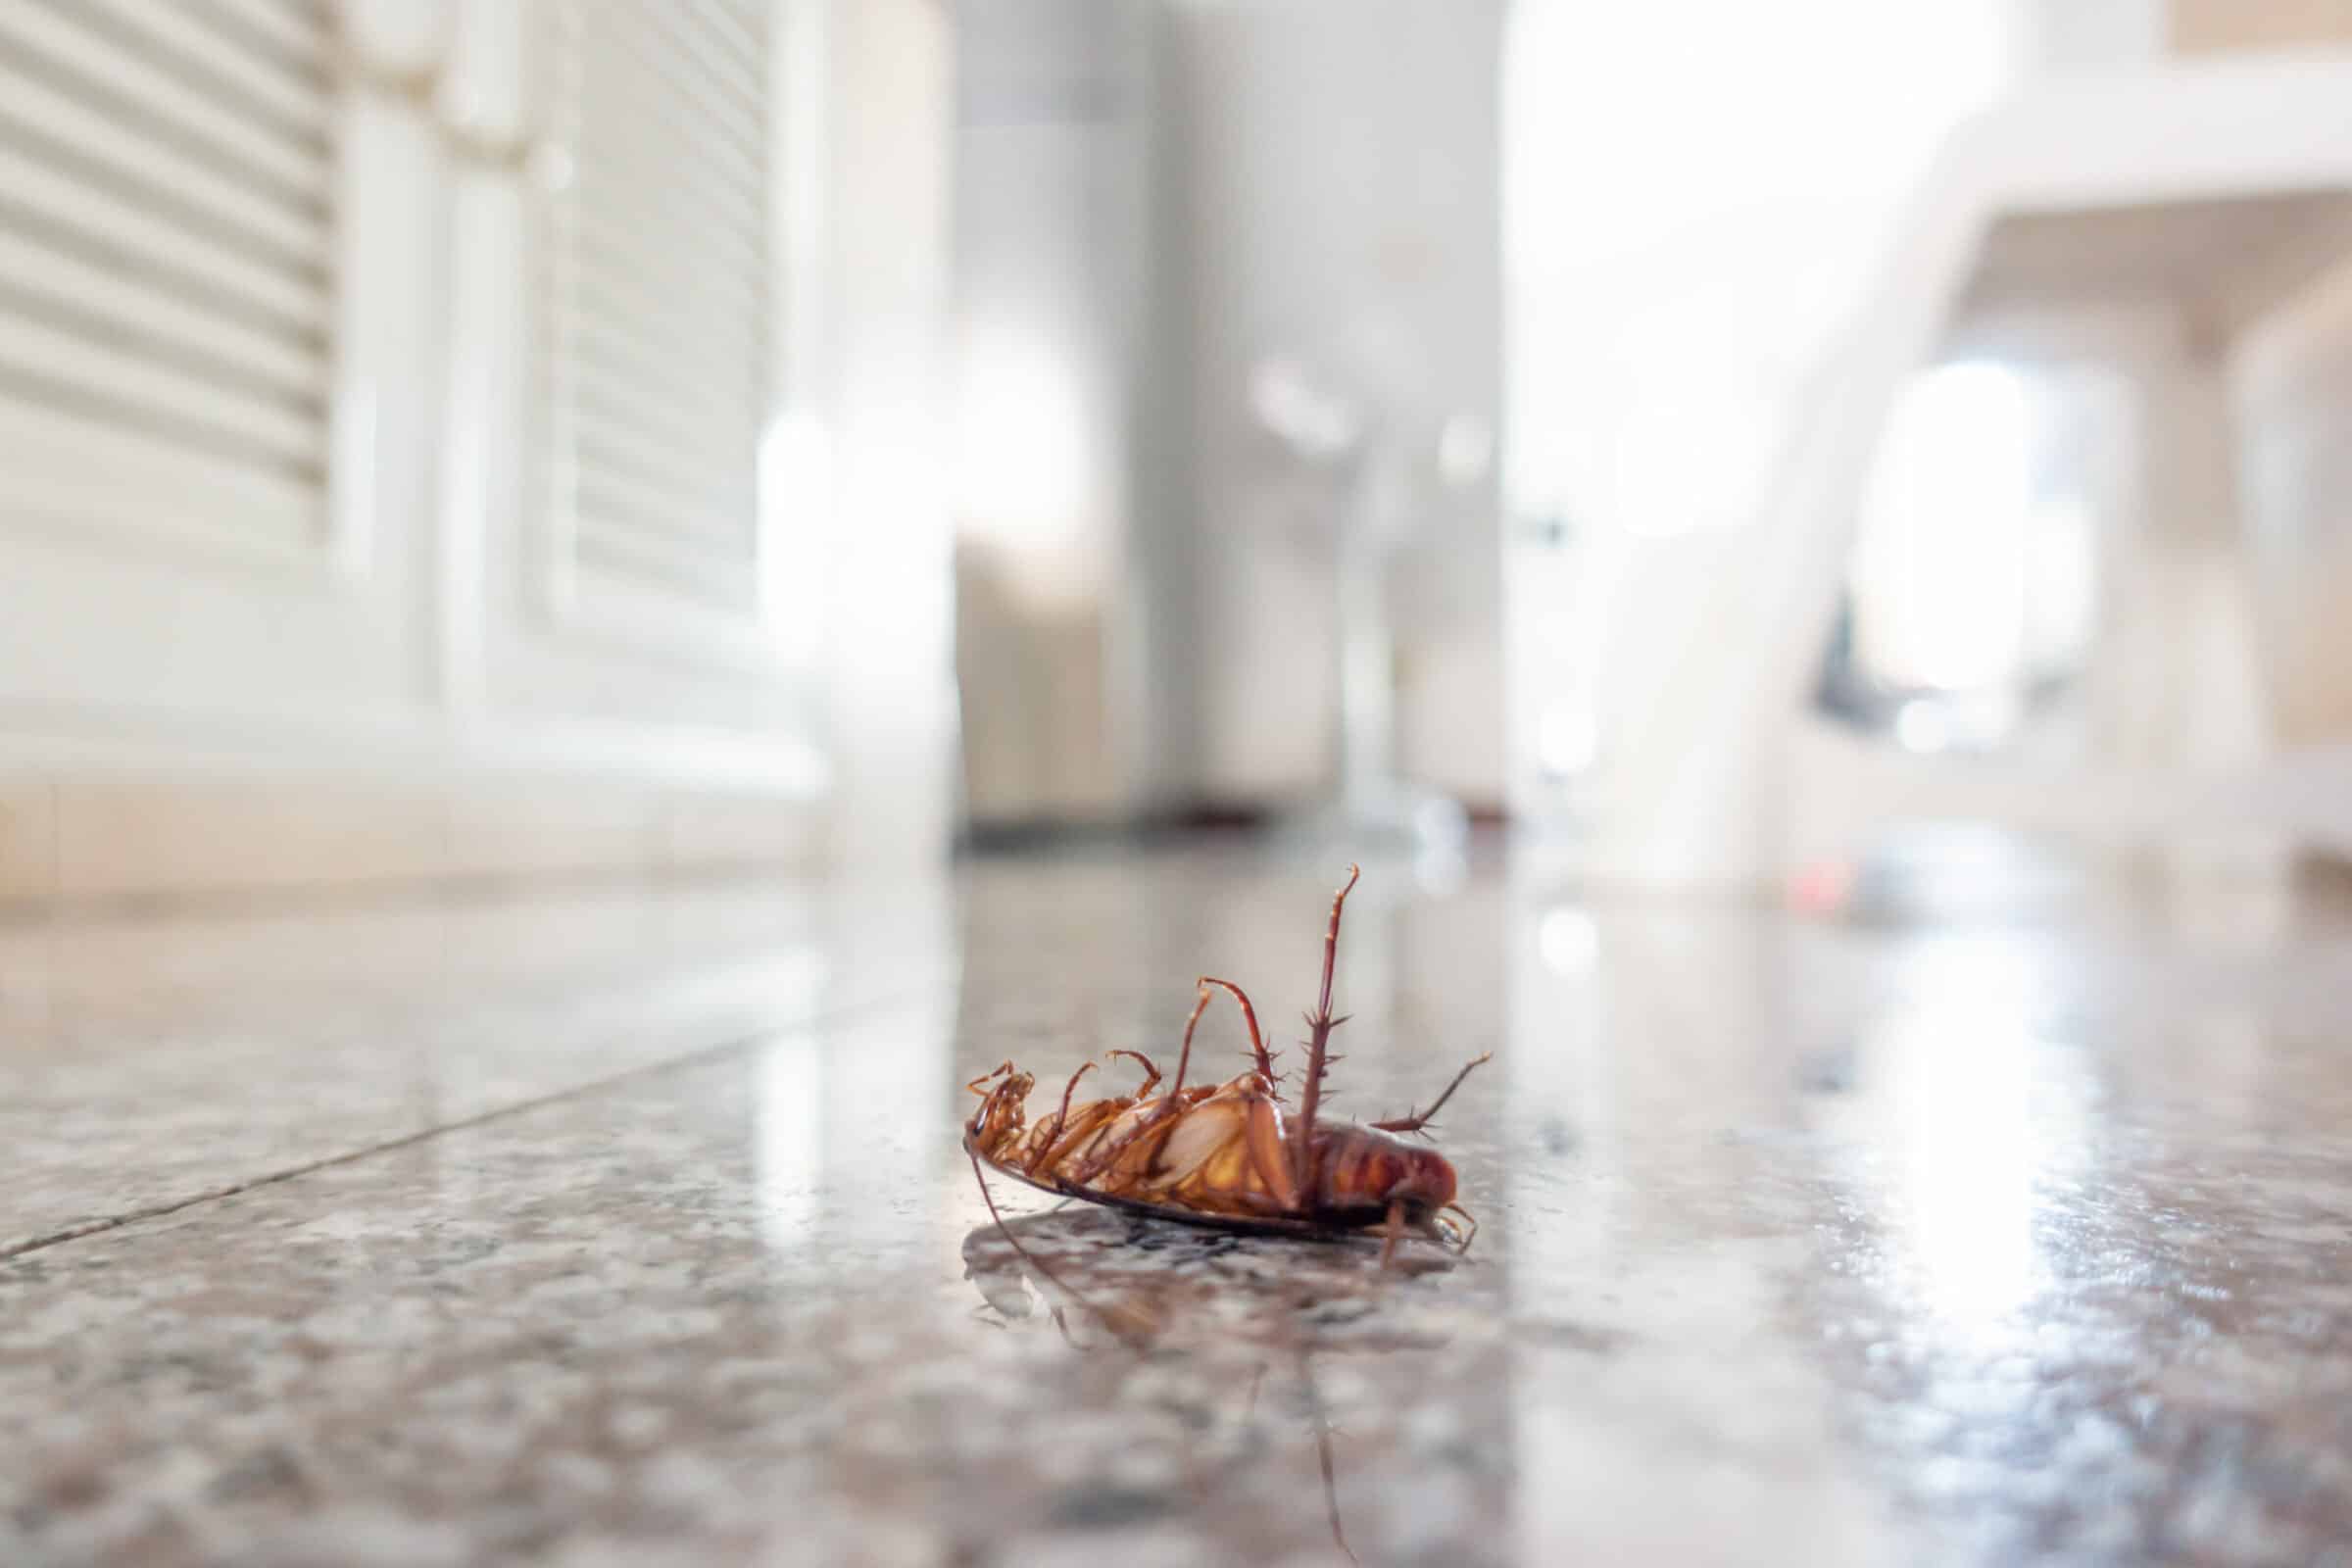 Cockroach infestation in Arizona Home